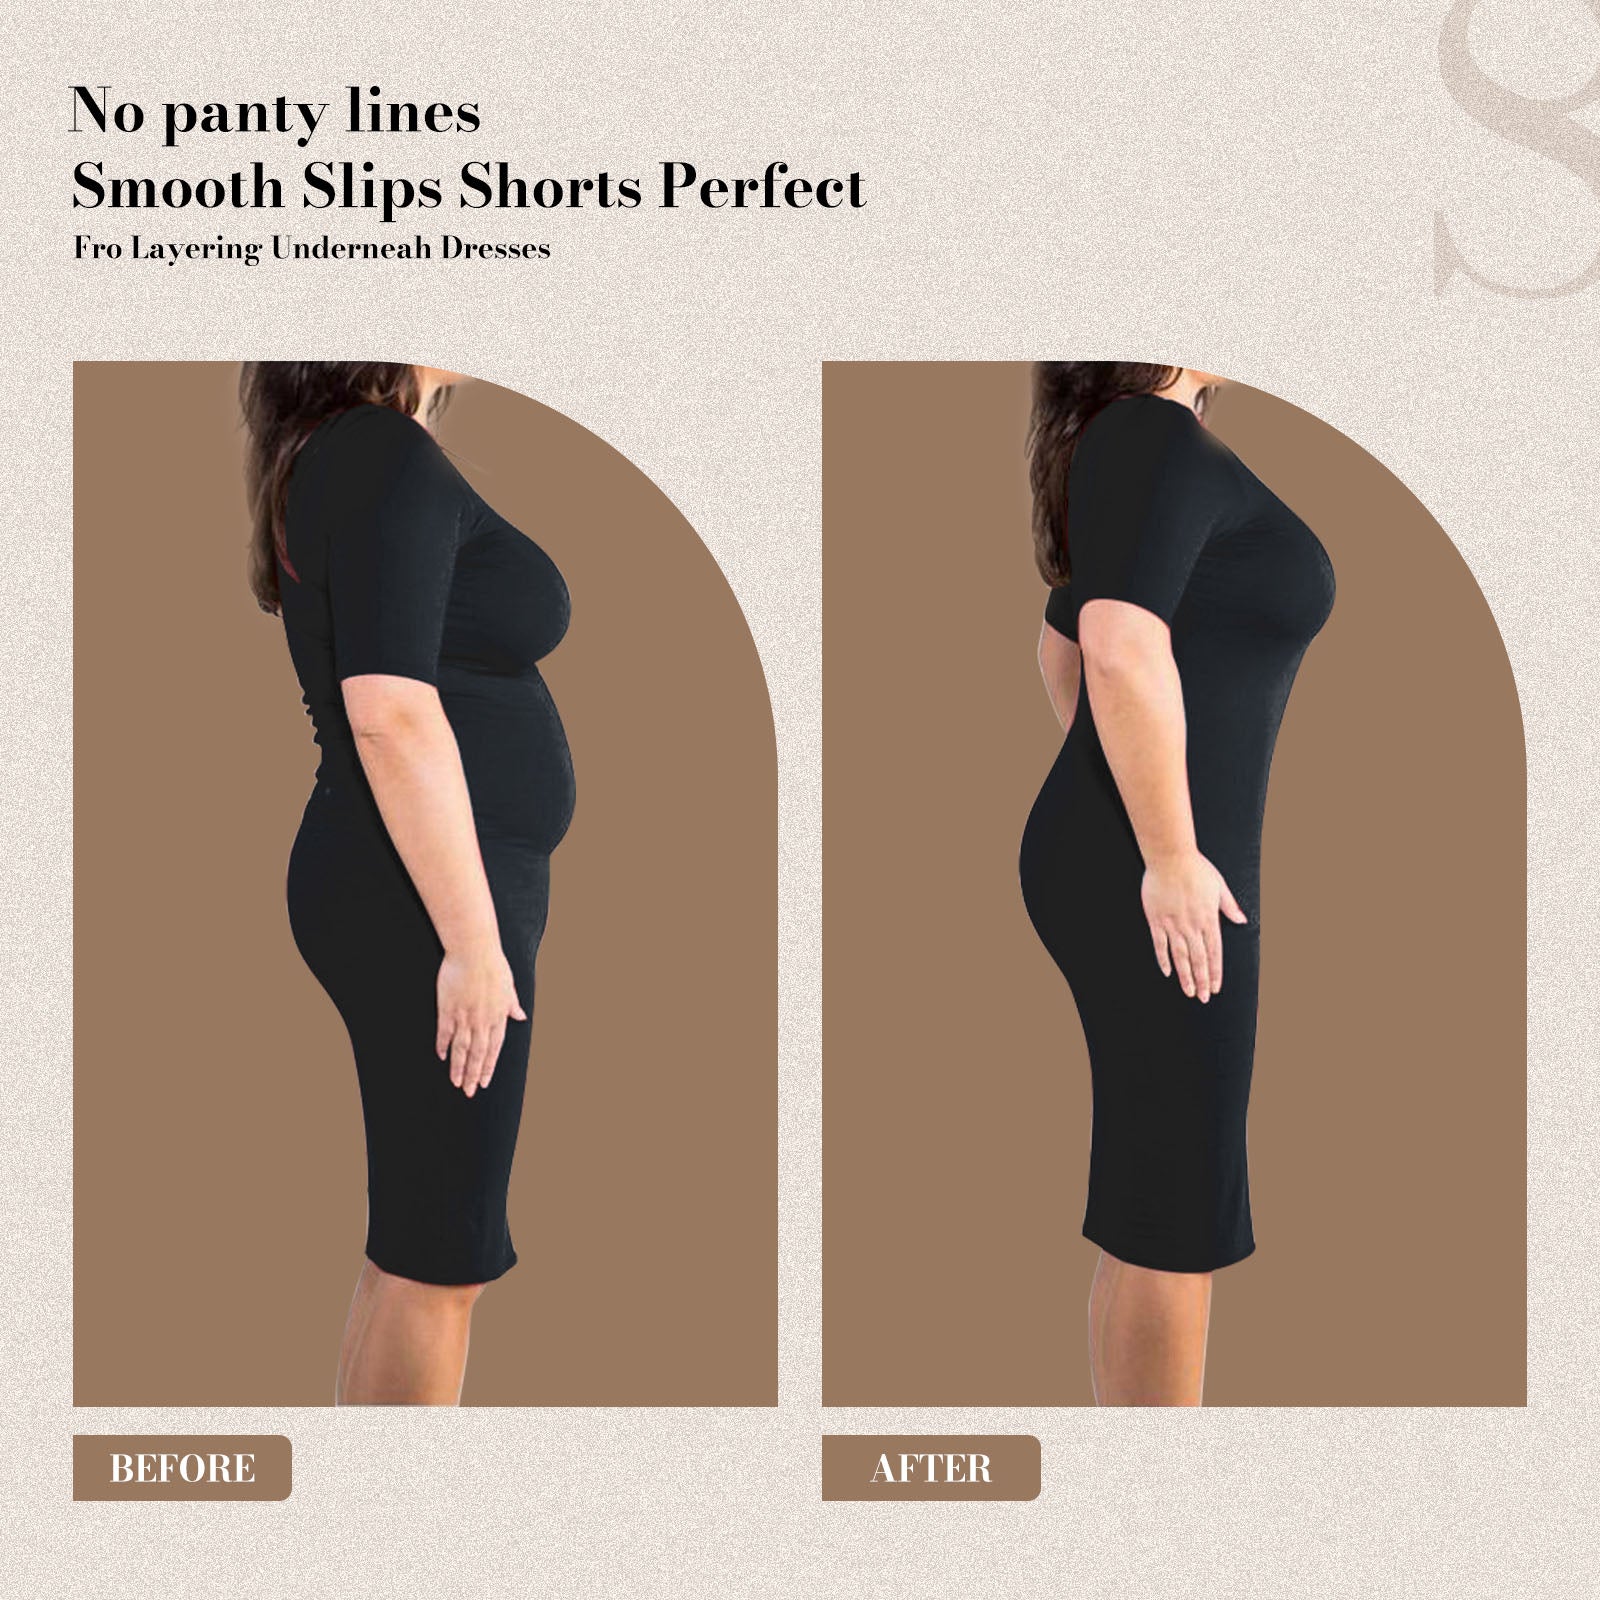 Shaperin Tummy Control Faja Shorts Shapewear